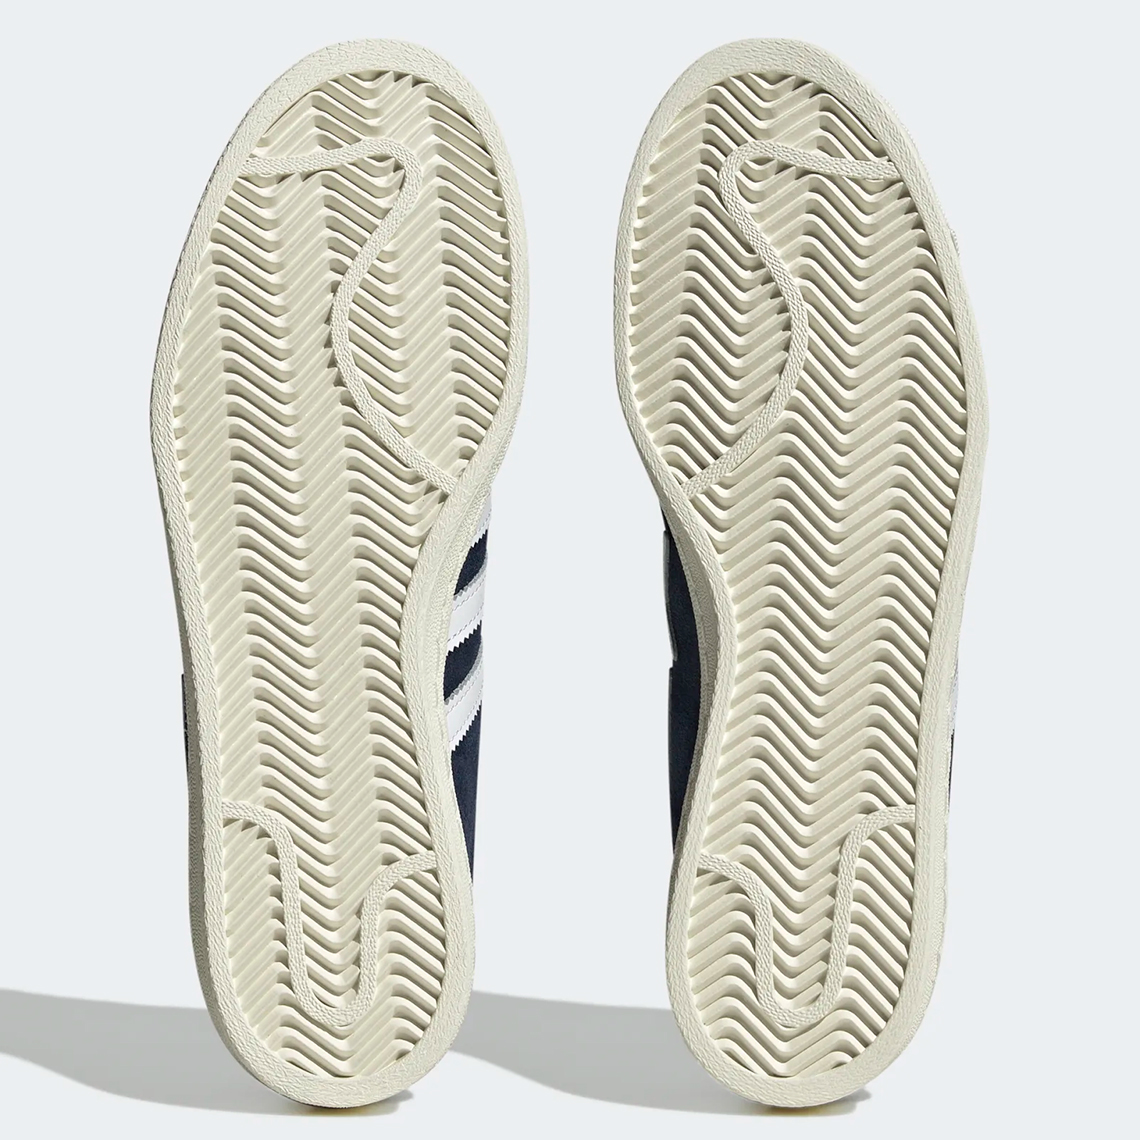 BAPE adidas 30th Anniversary Teaser | SneakerNews.com